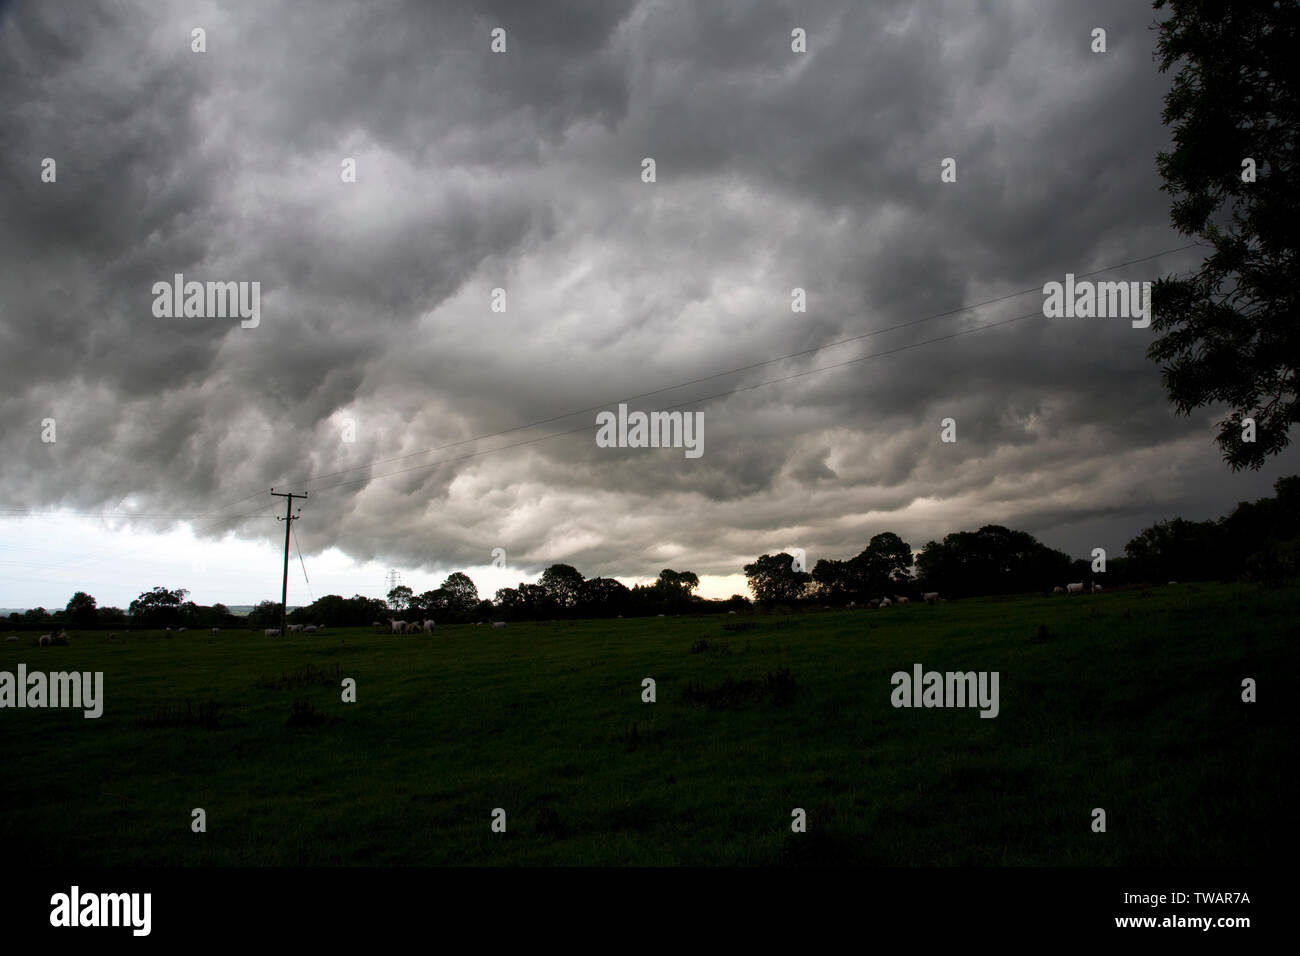 Oscuras nubes de tormenta se cierne sobre Miguel Meon colina cerca de Mickleton, Chipping Campden, RU Foto de stock